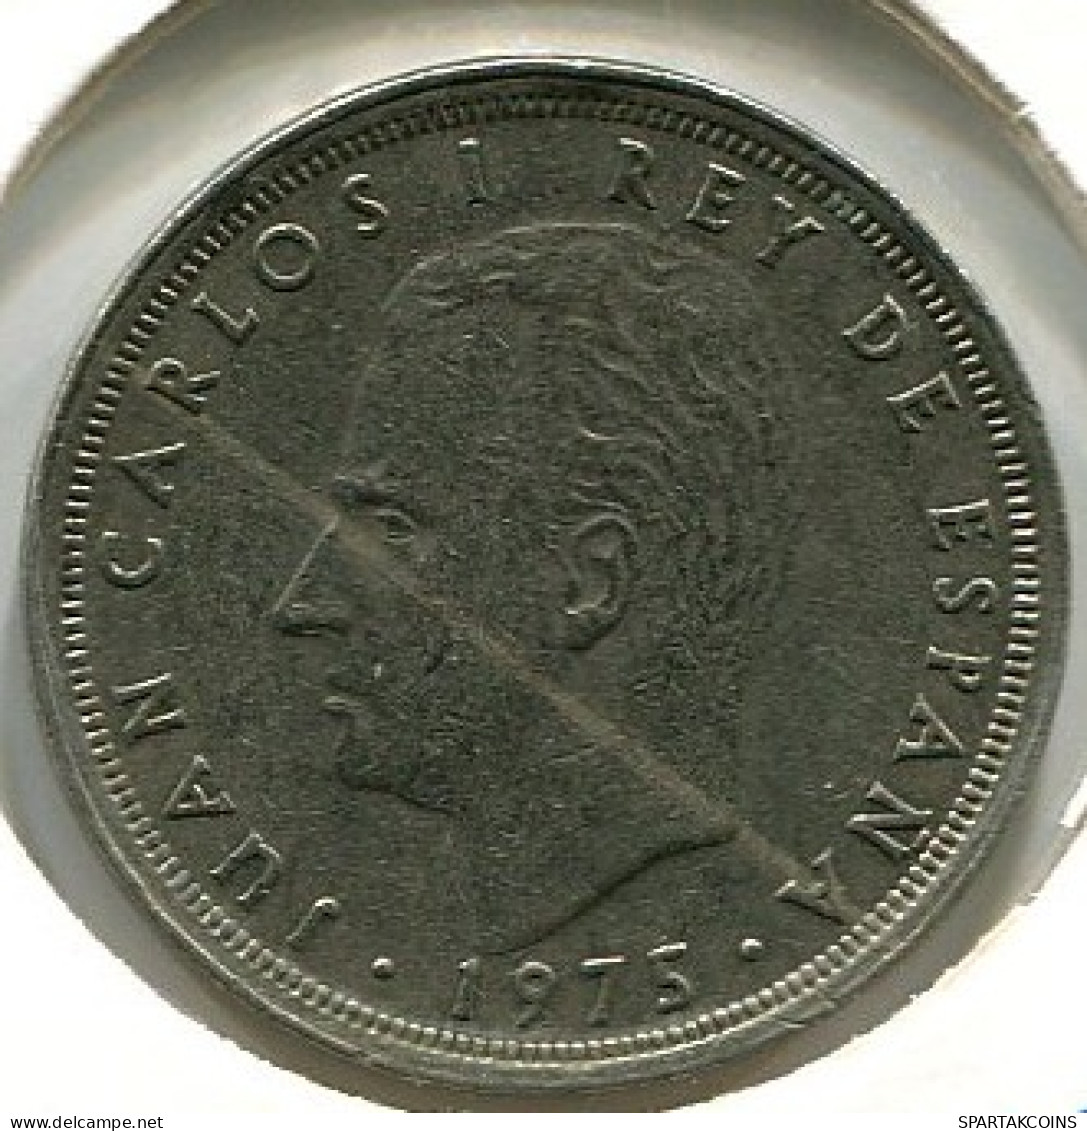 25 PESETAS 1975 SPAIN Coin #W10541.2.U - 25 Pesetas